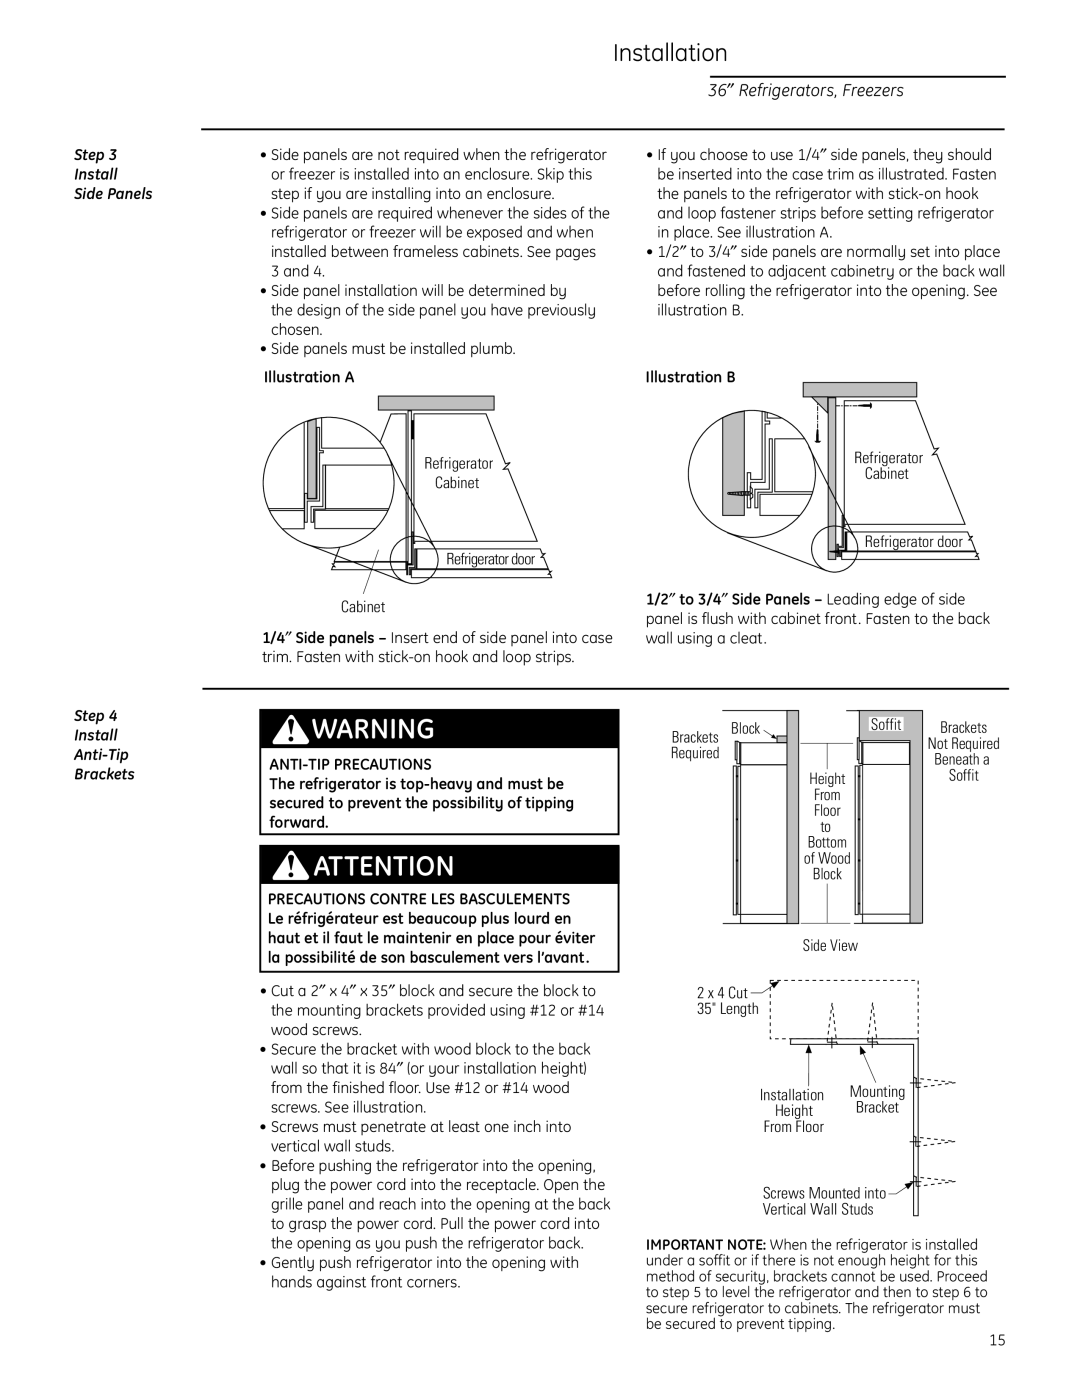 GE ZIF36N LH Installation, 36″ Refrigerators, Freezers, Step Install Side Panels, Illustration A, Illustration B 